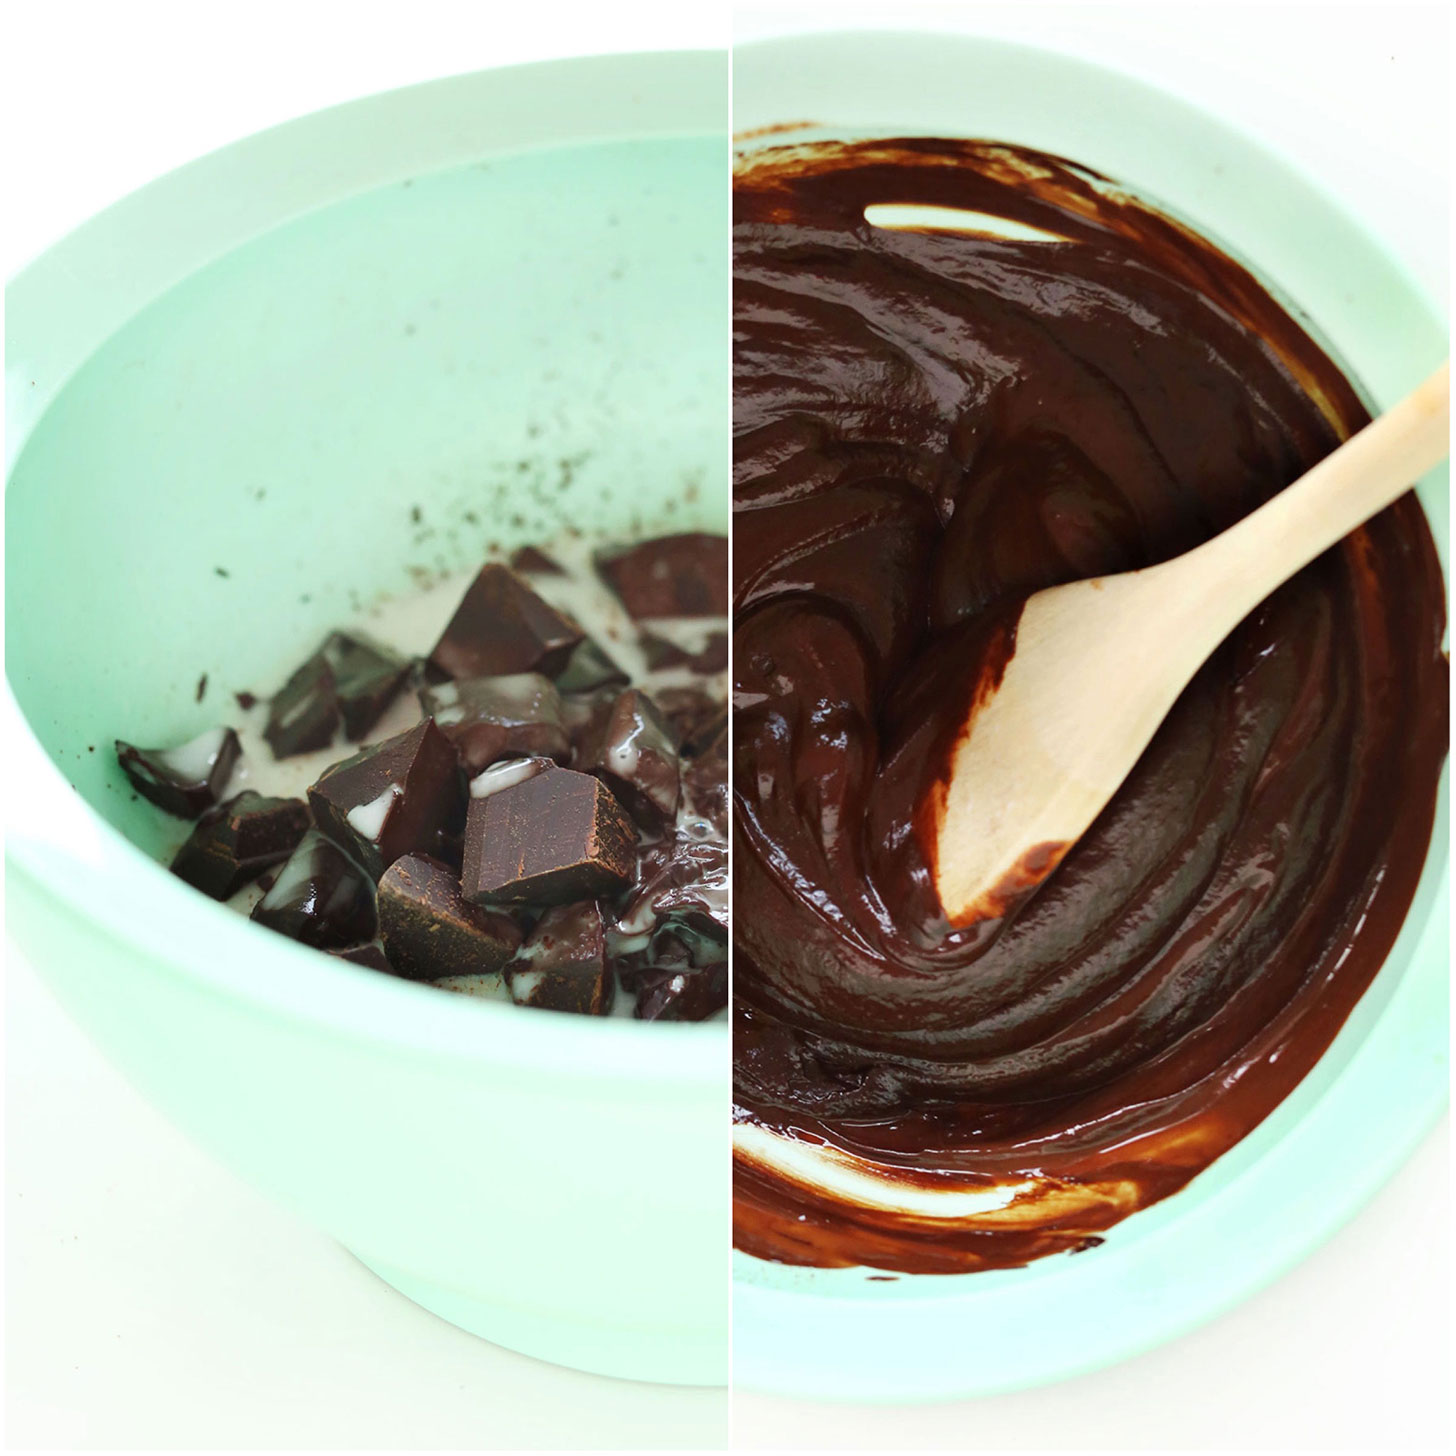 Mixing together ingredients for homemade Dark Chocolate Vegan Truffles